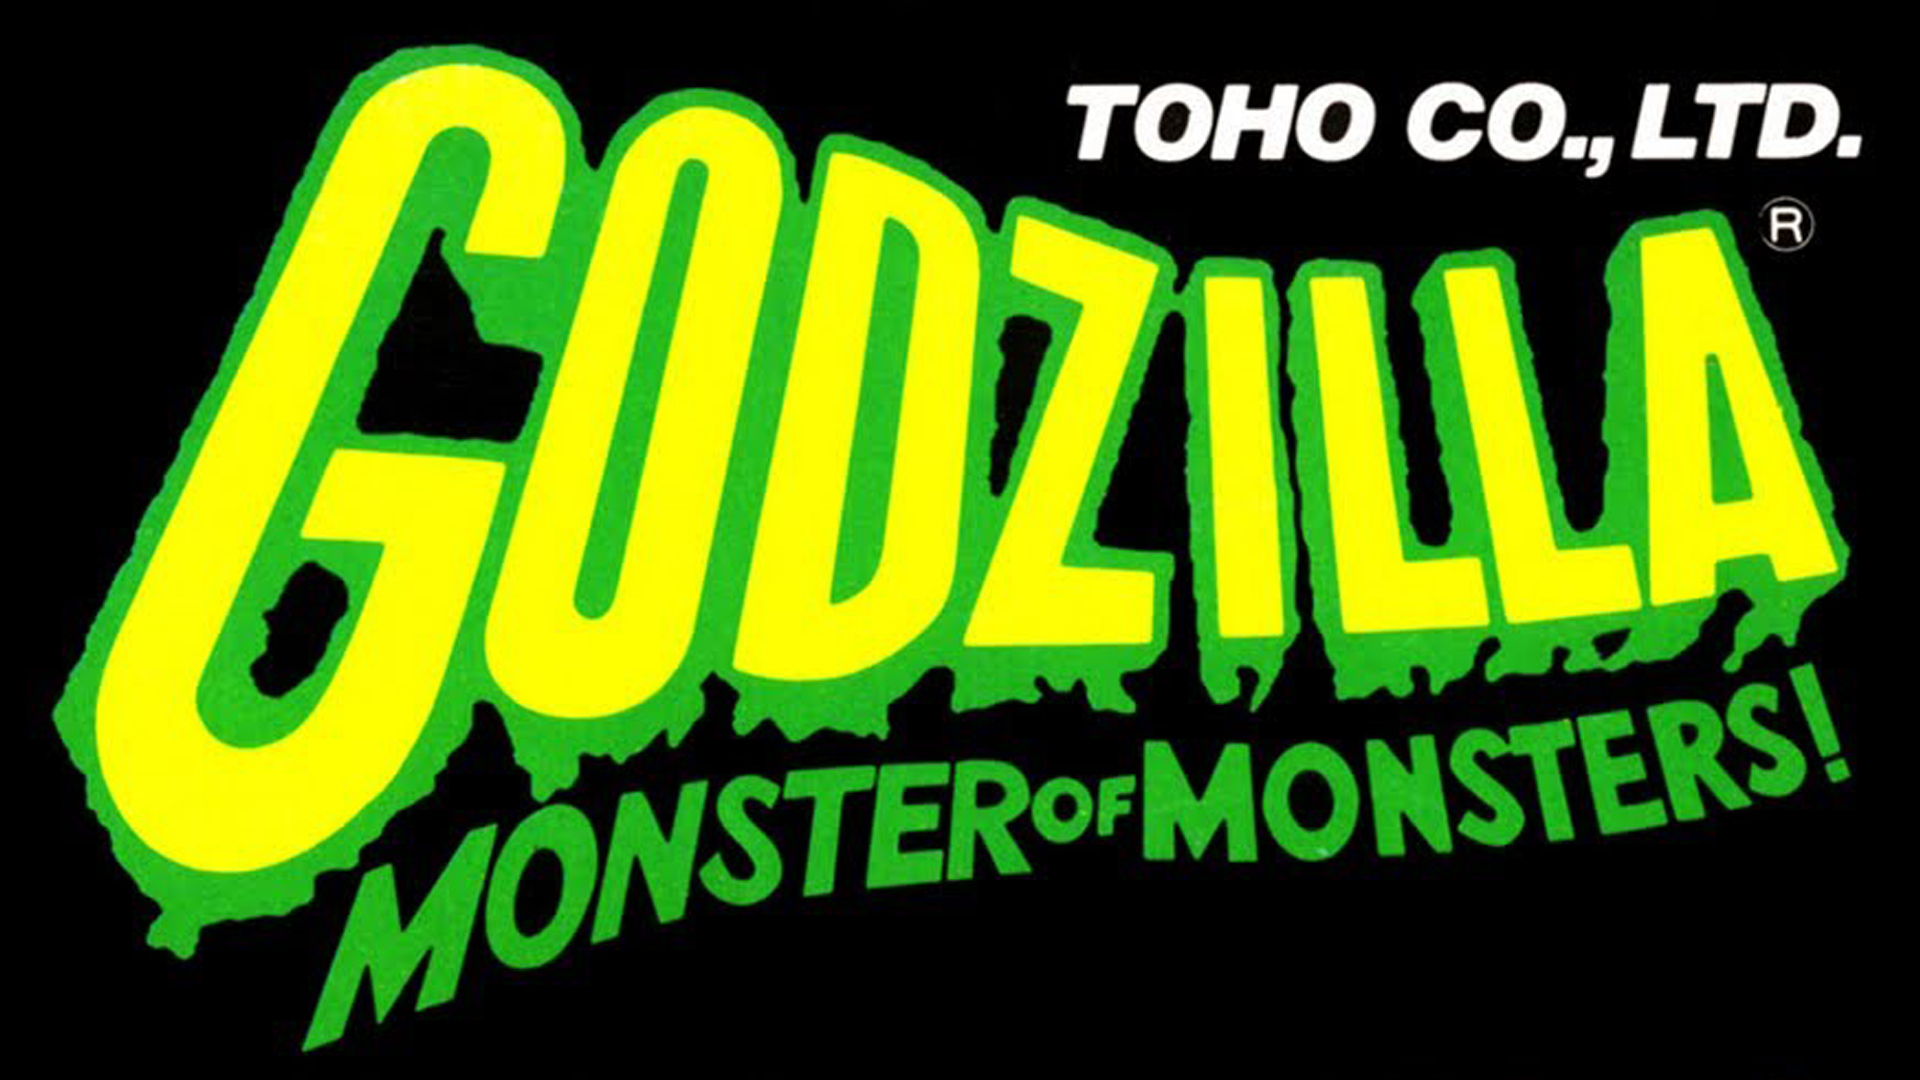 Godzilla - Monster of Monsters Logo